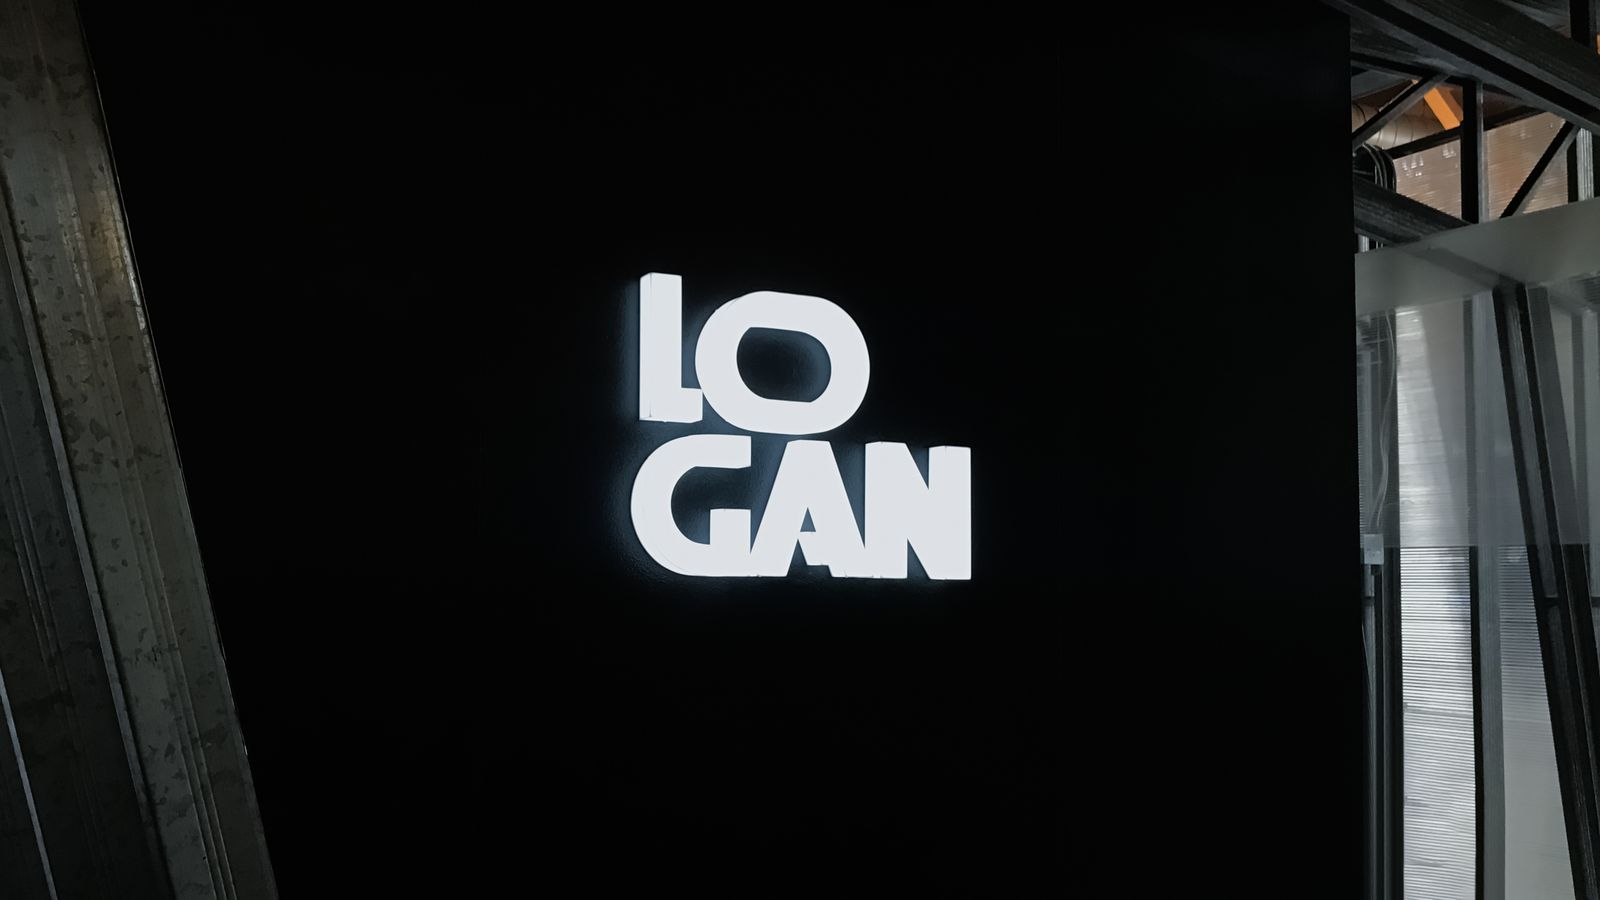 Logan illuminated interior signage displaying the company name made of acrylic for branding